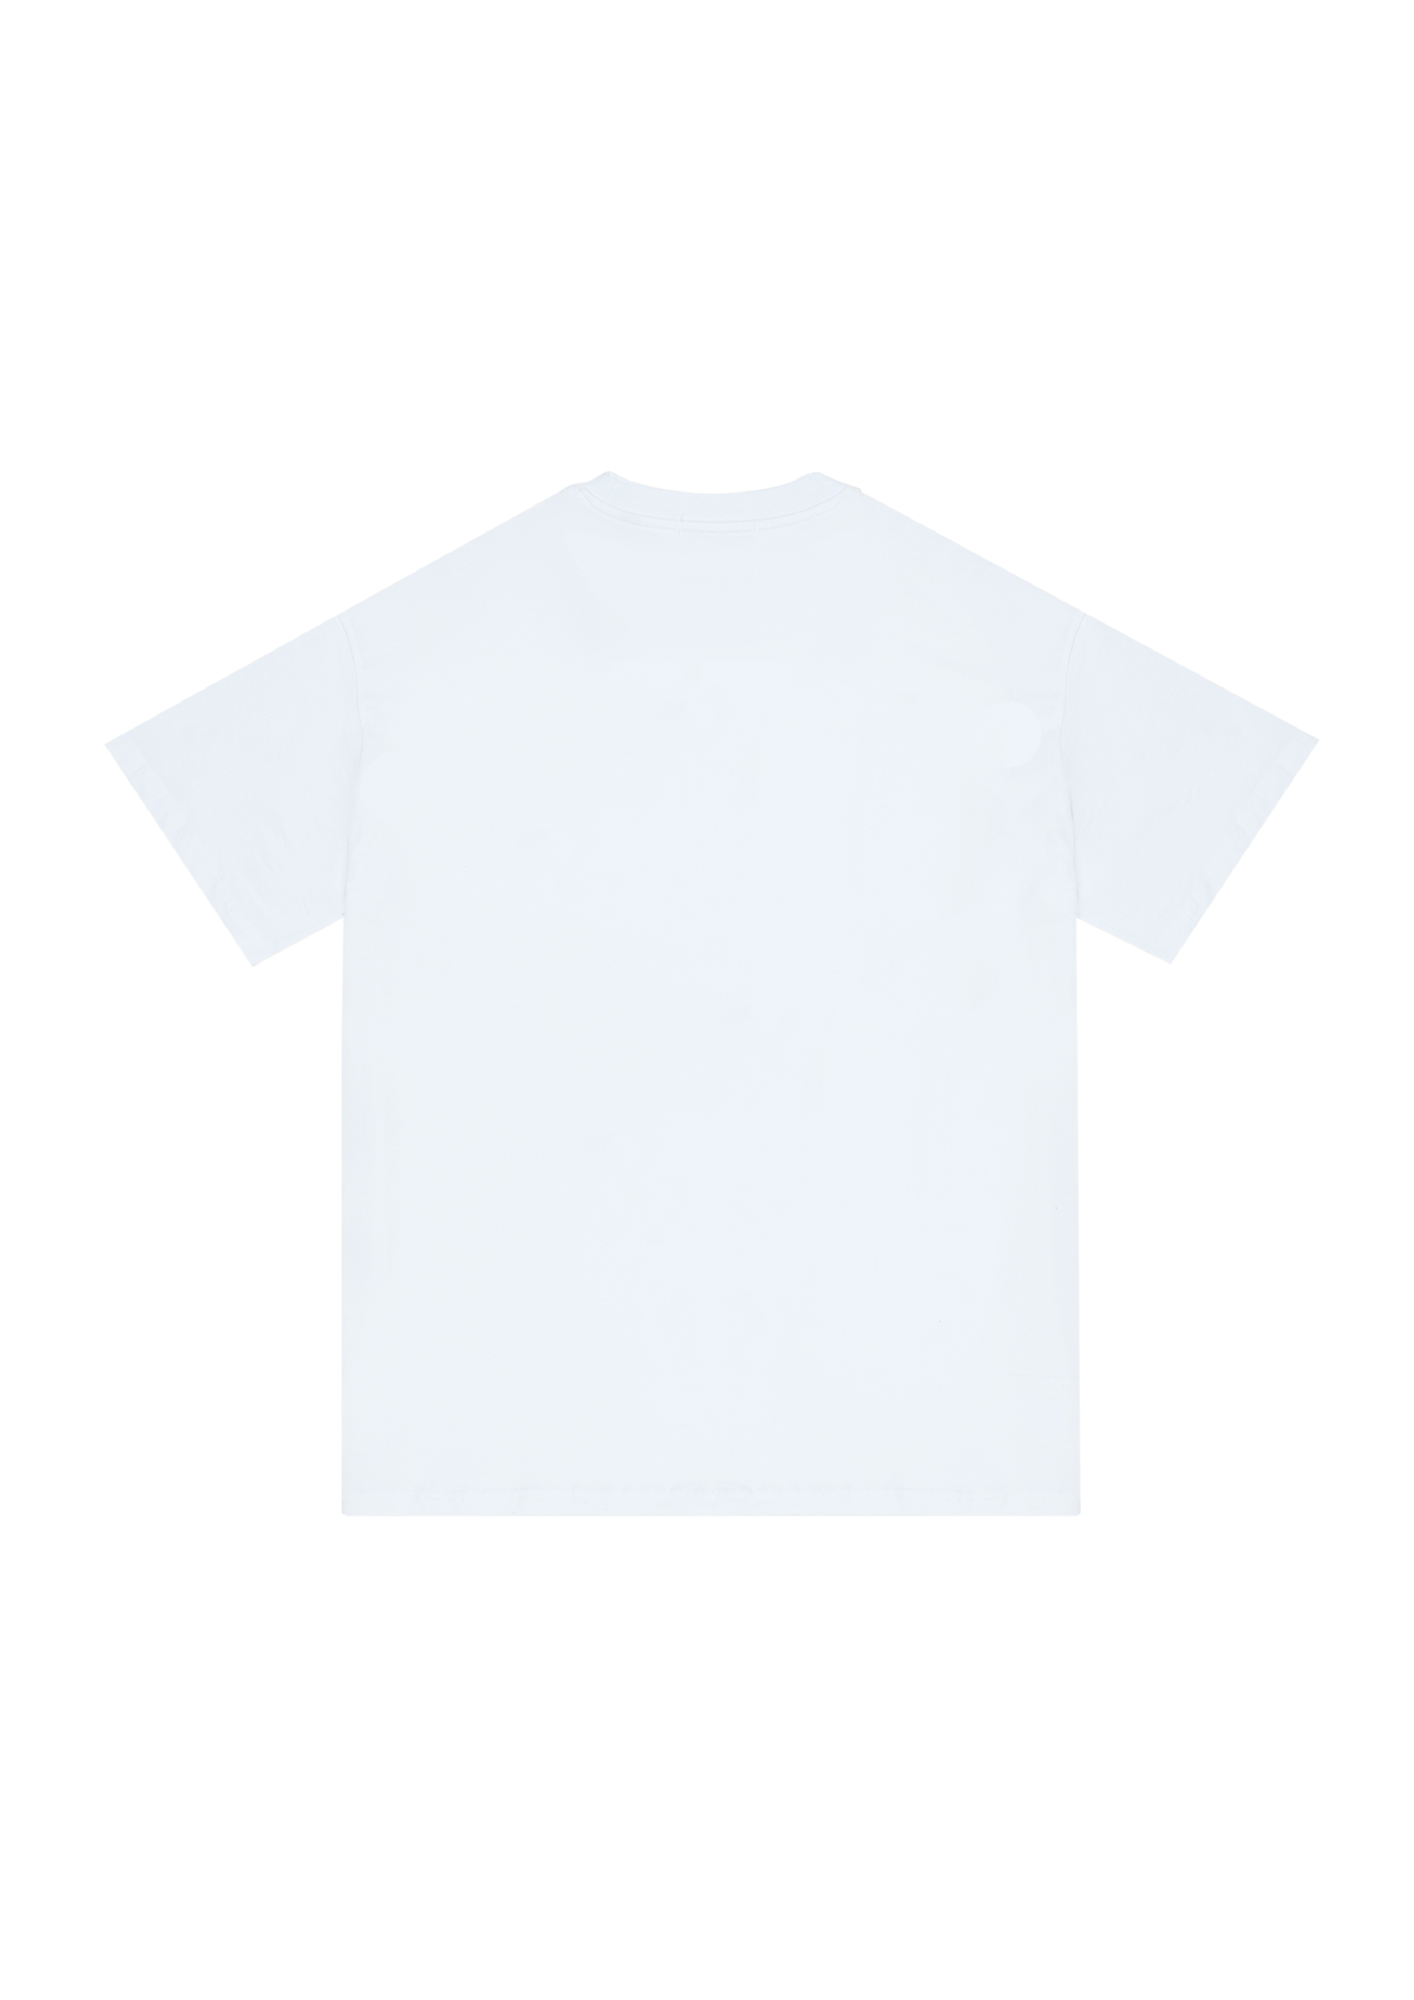 Legends T-shirt "White"